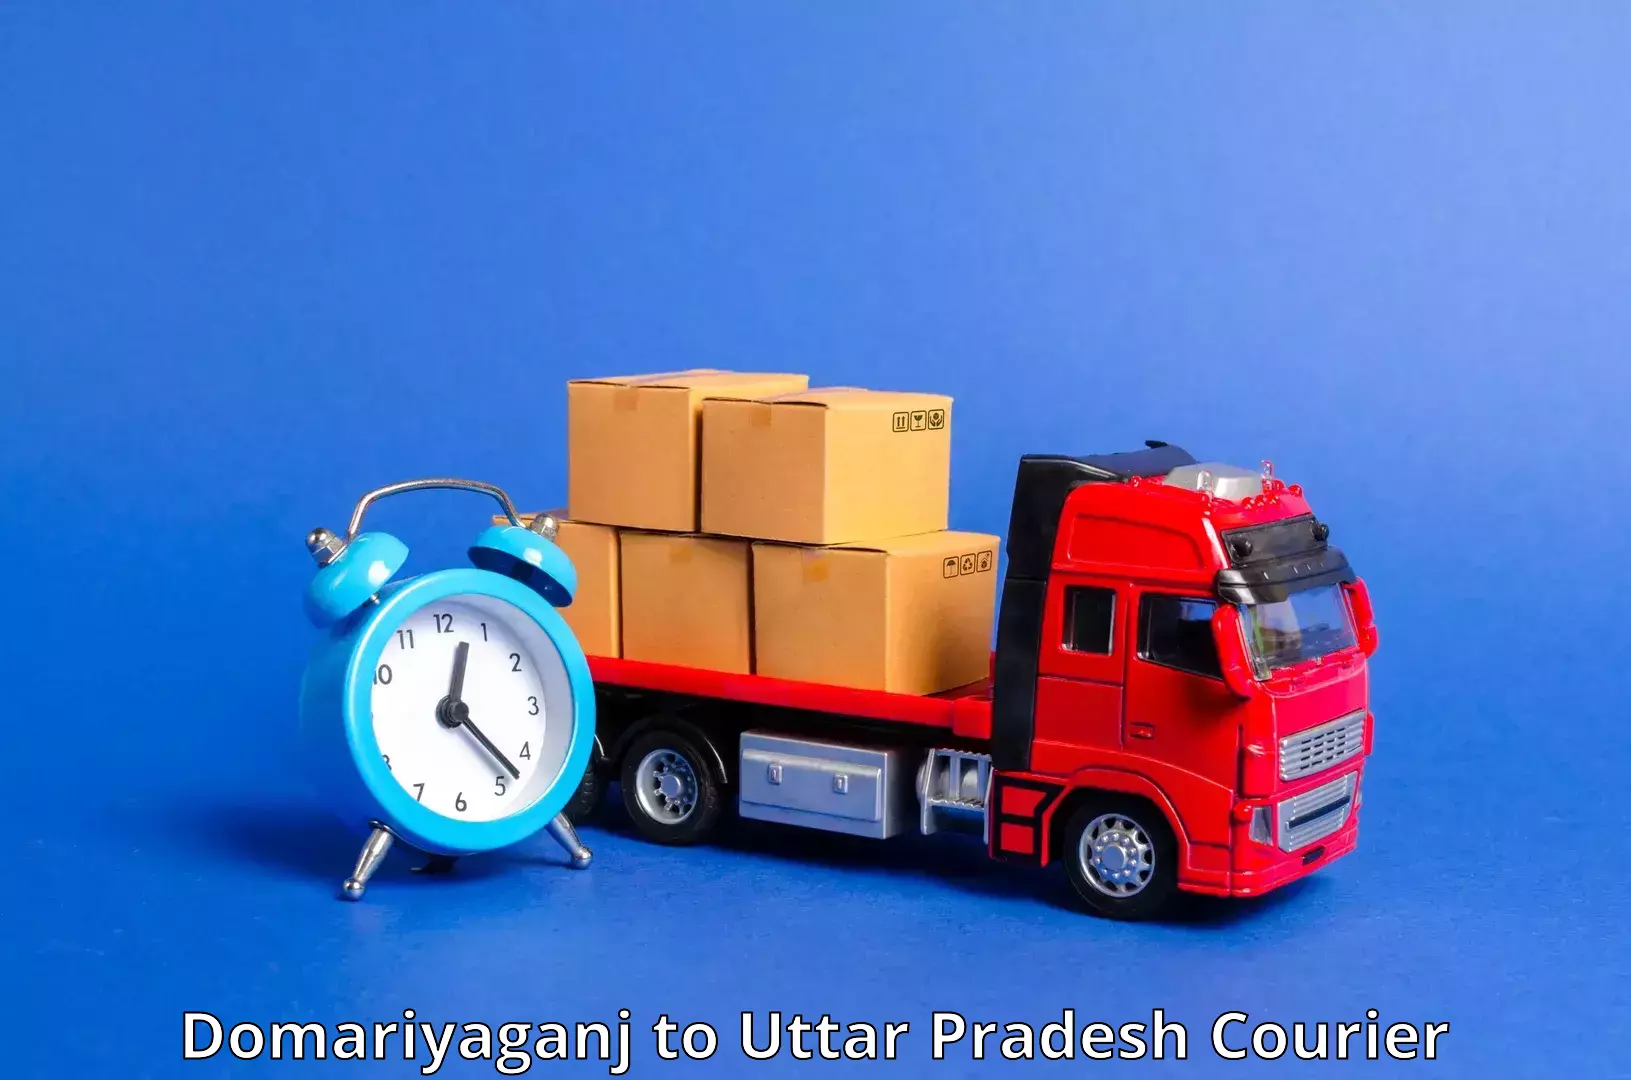 State-of-the-art courier technology Domariyaganj to Sahatwar